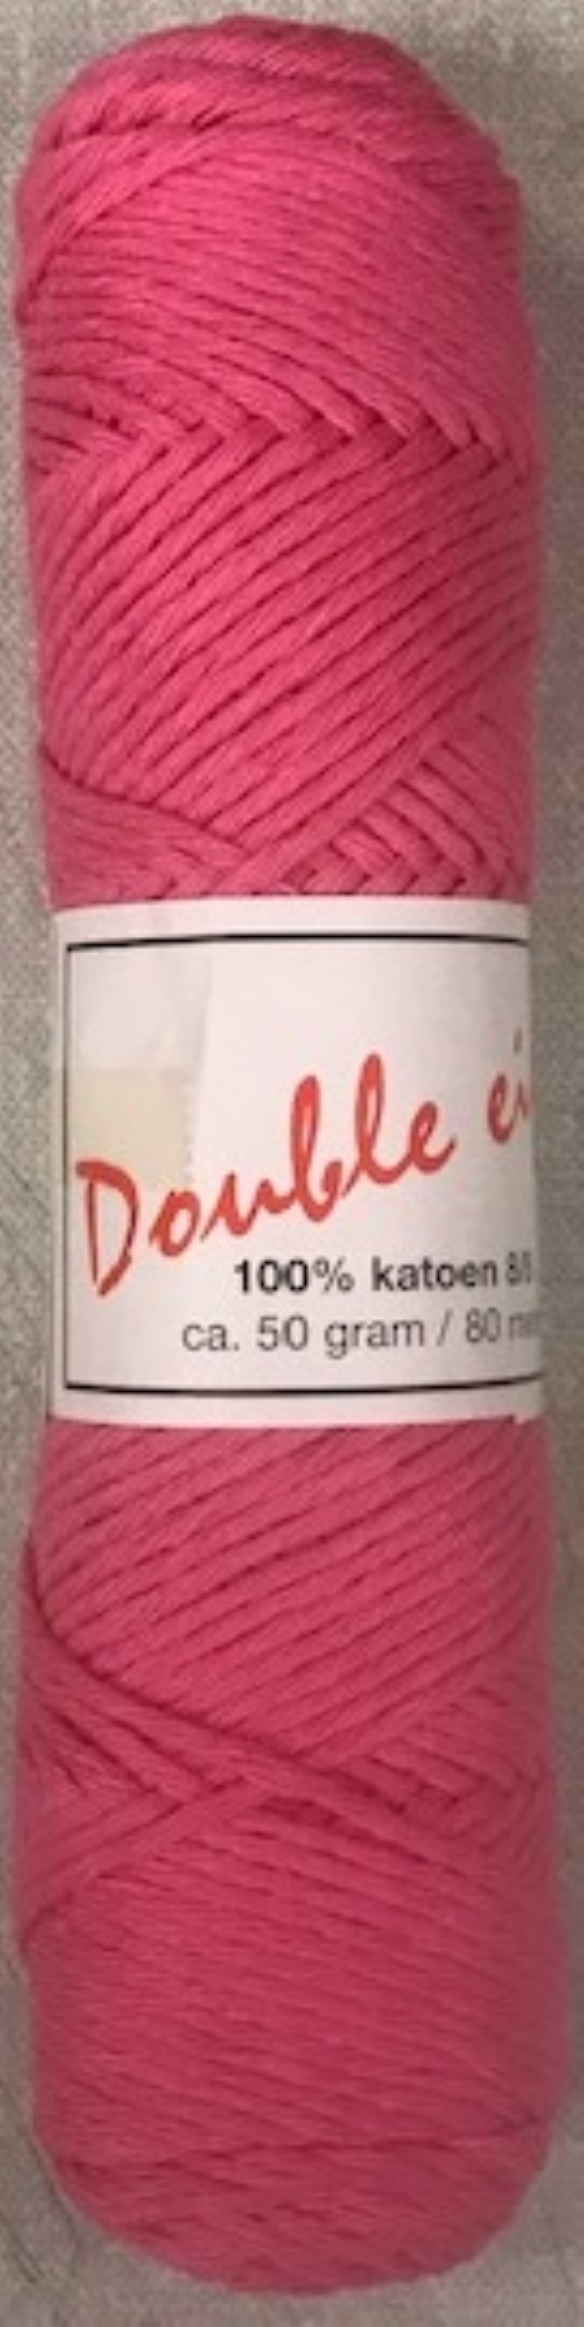 Cotton doubele eight 8/8, katoenen breigaren/haakgaren, 50 gram, donkerrose kopen?